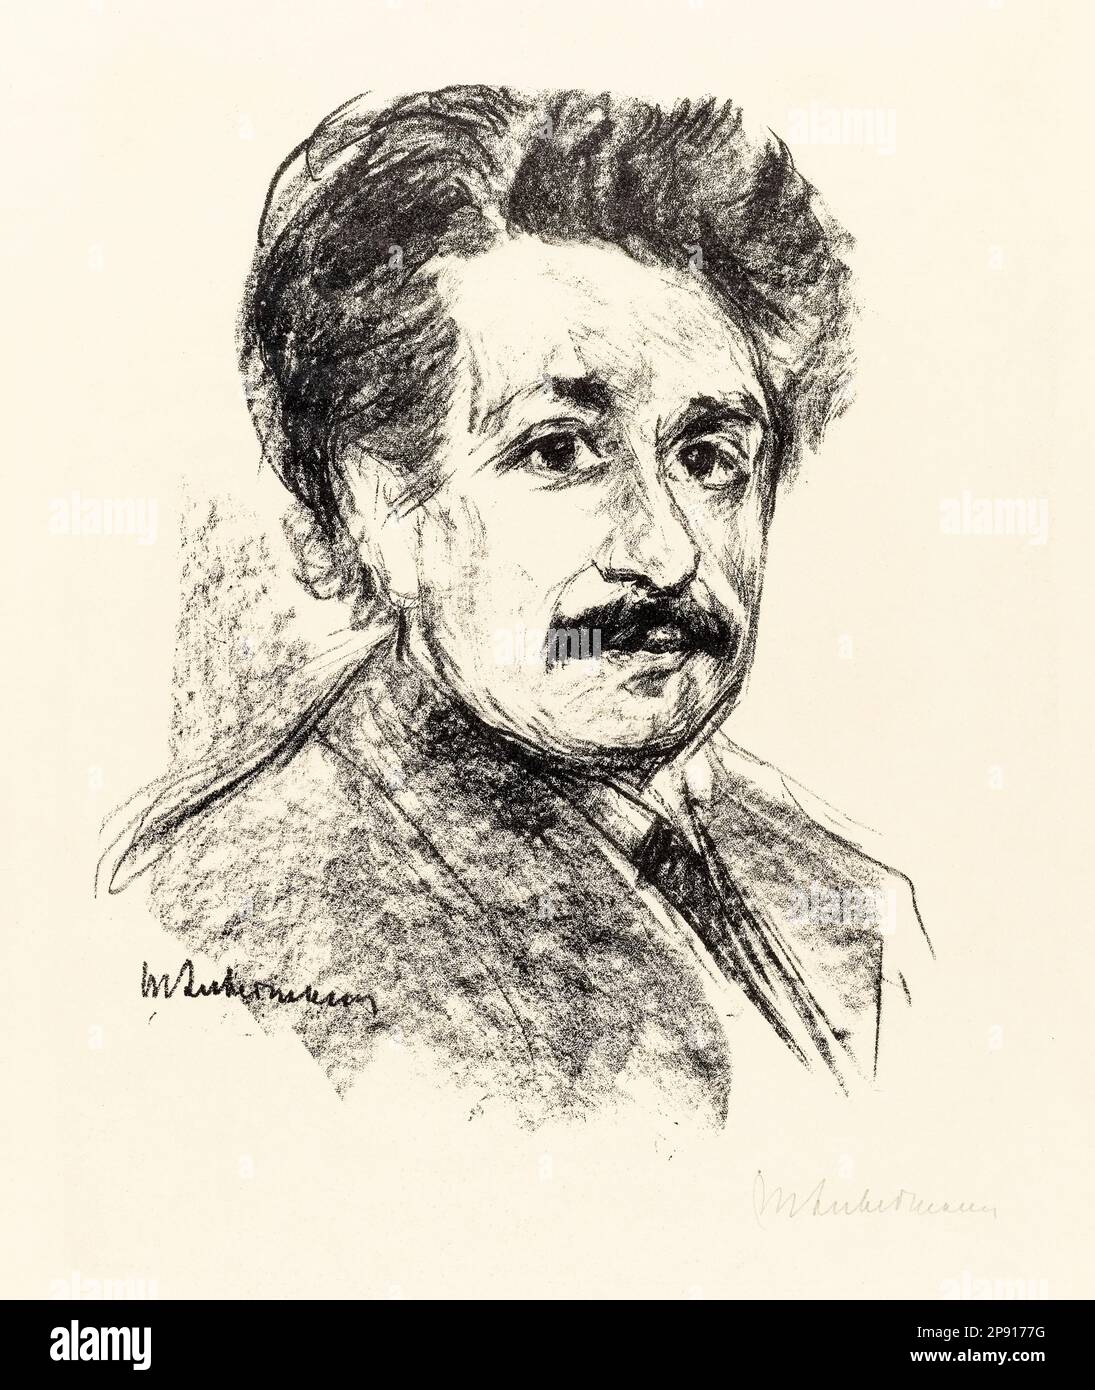 Portrait of Albert Einstein (1879-1955), German born theoretical physicist,  drawing by Max Liebermann, before 1935 Stock Photo